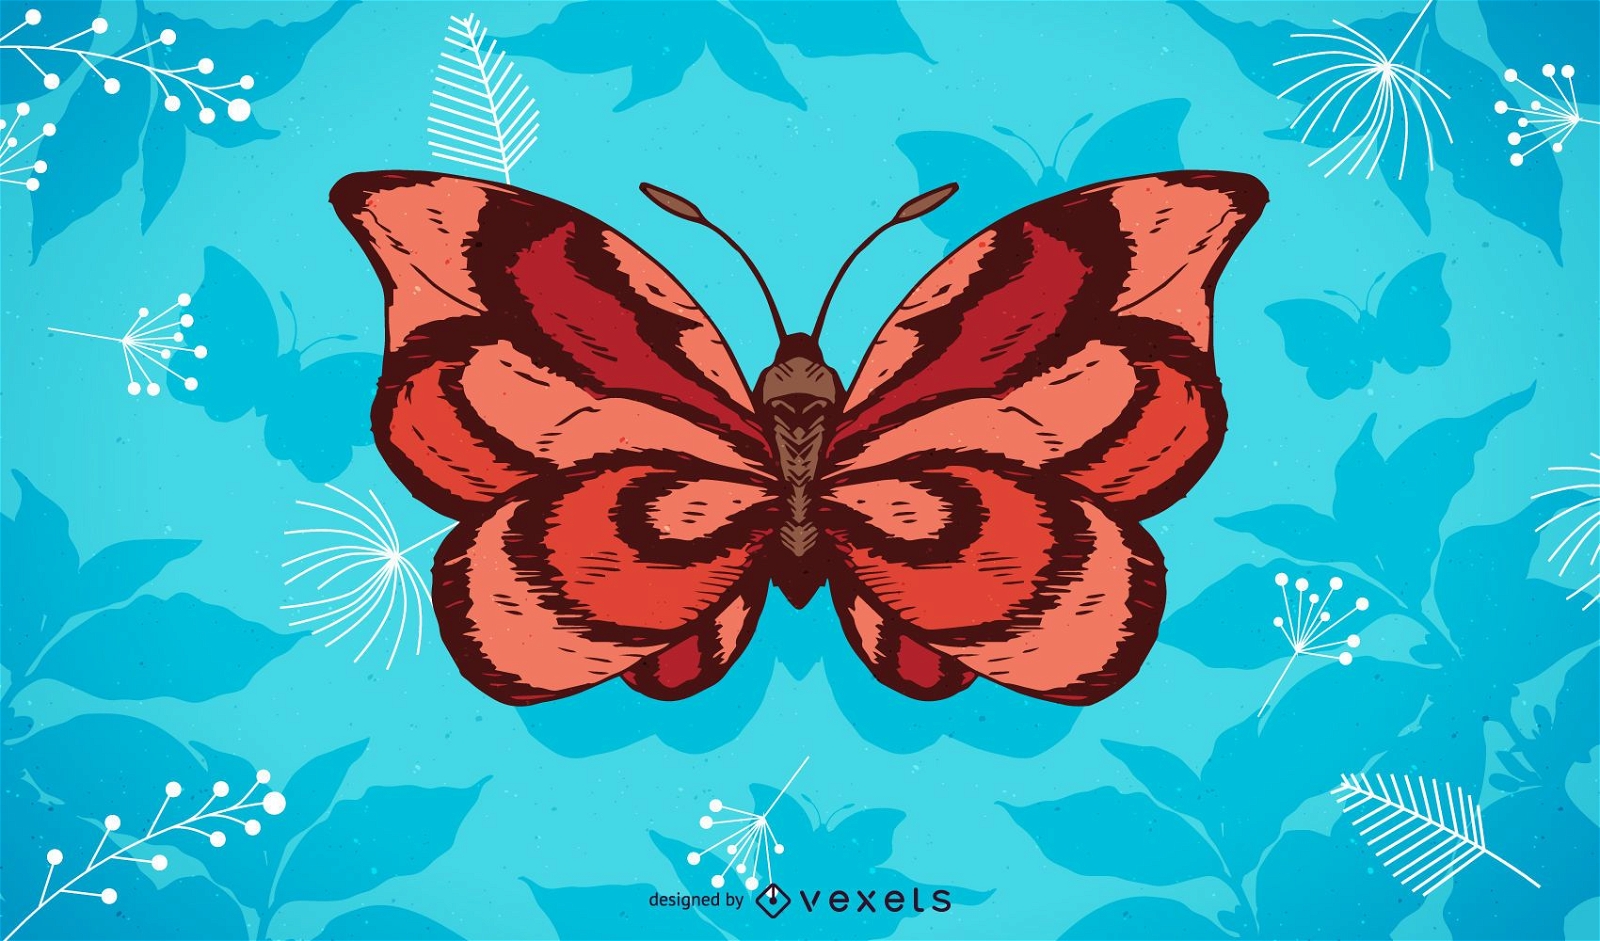 Butterfly illustration background